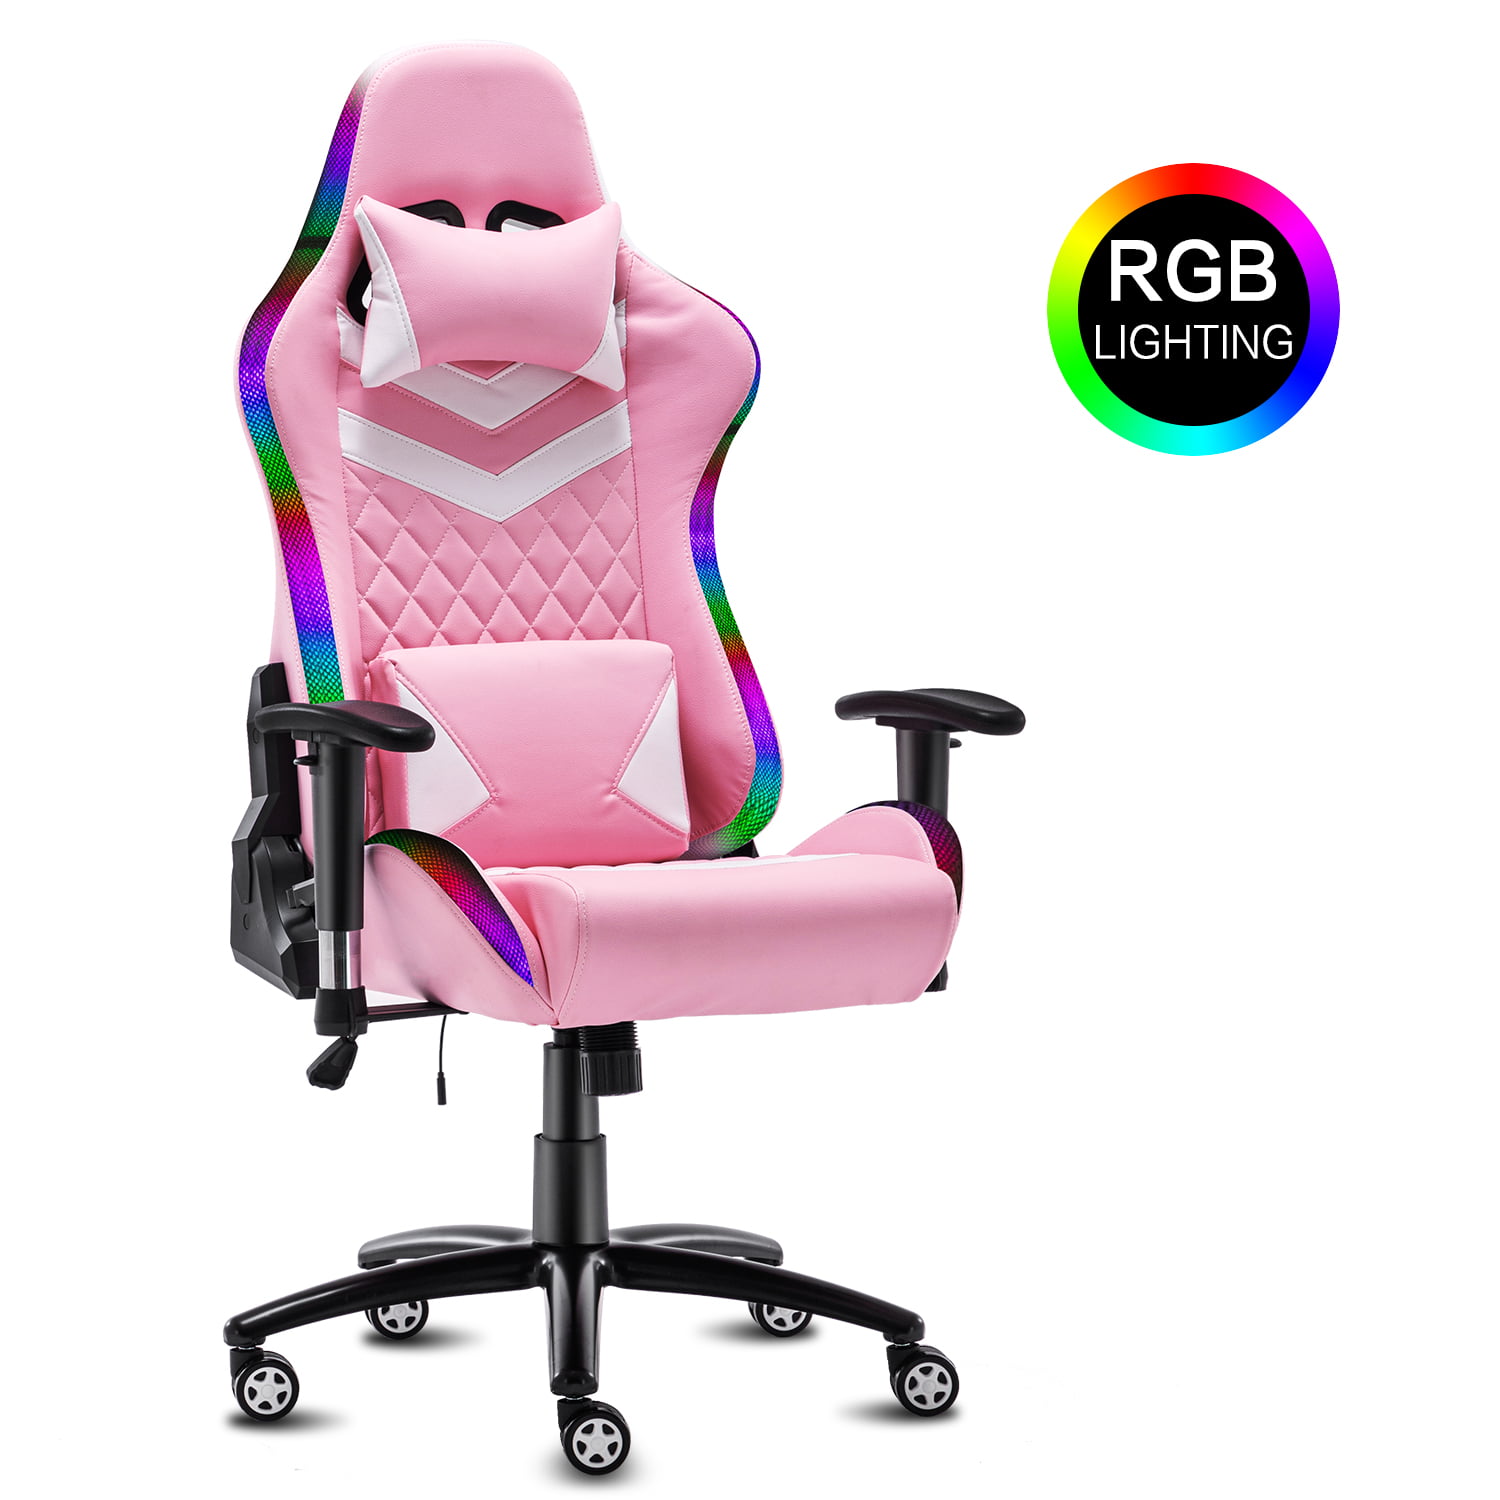 HighBack Ergonomic Gaming Chair with RGB LED Lights